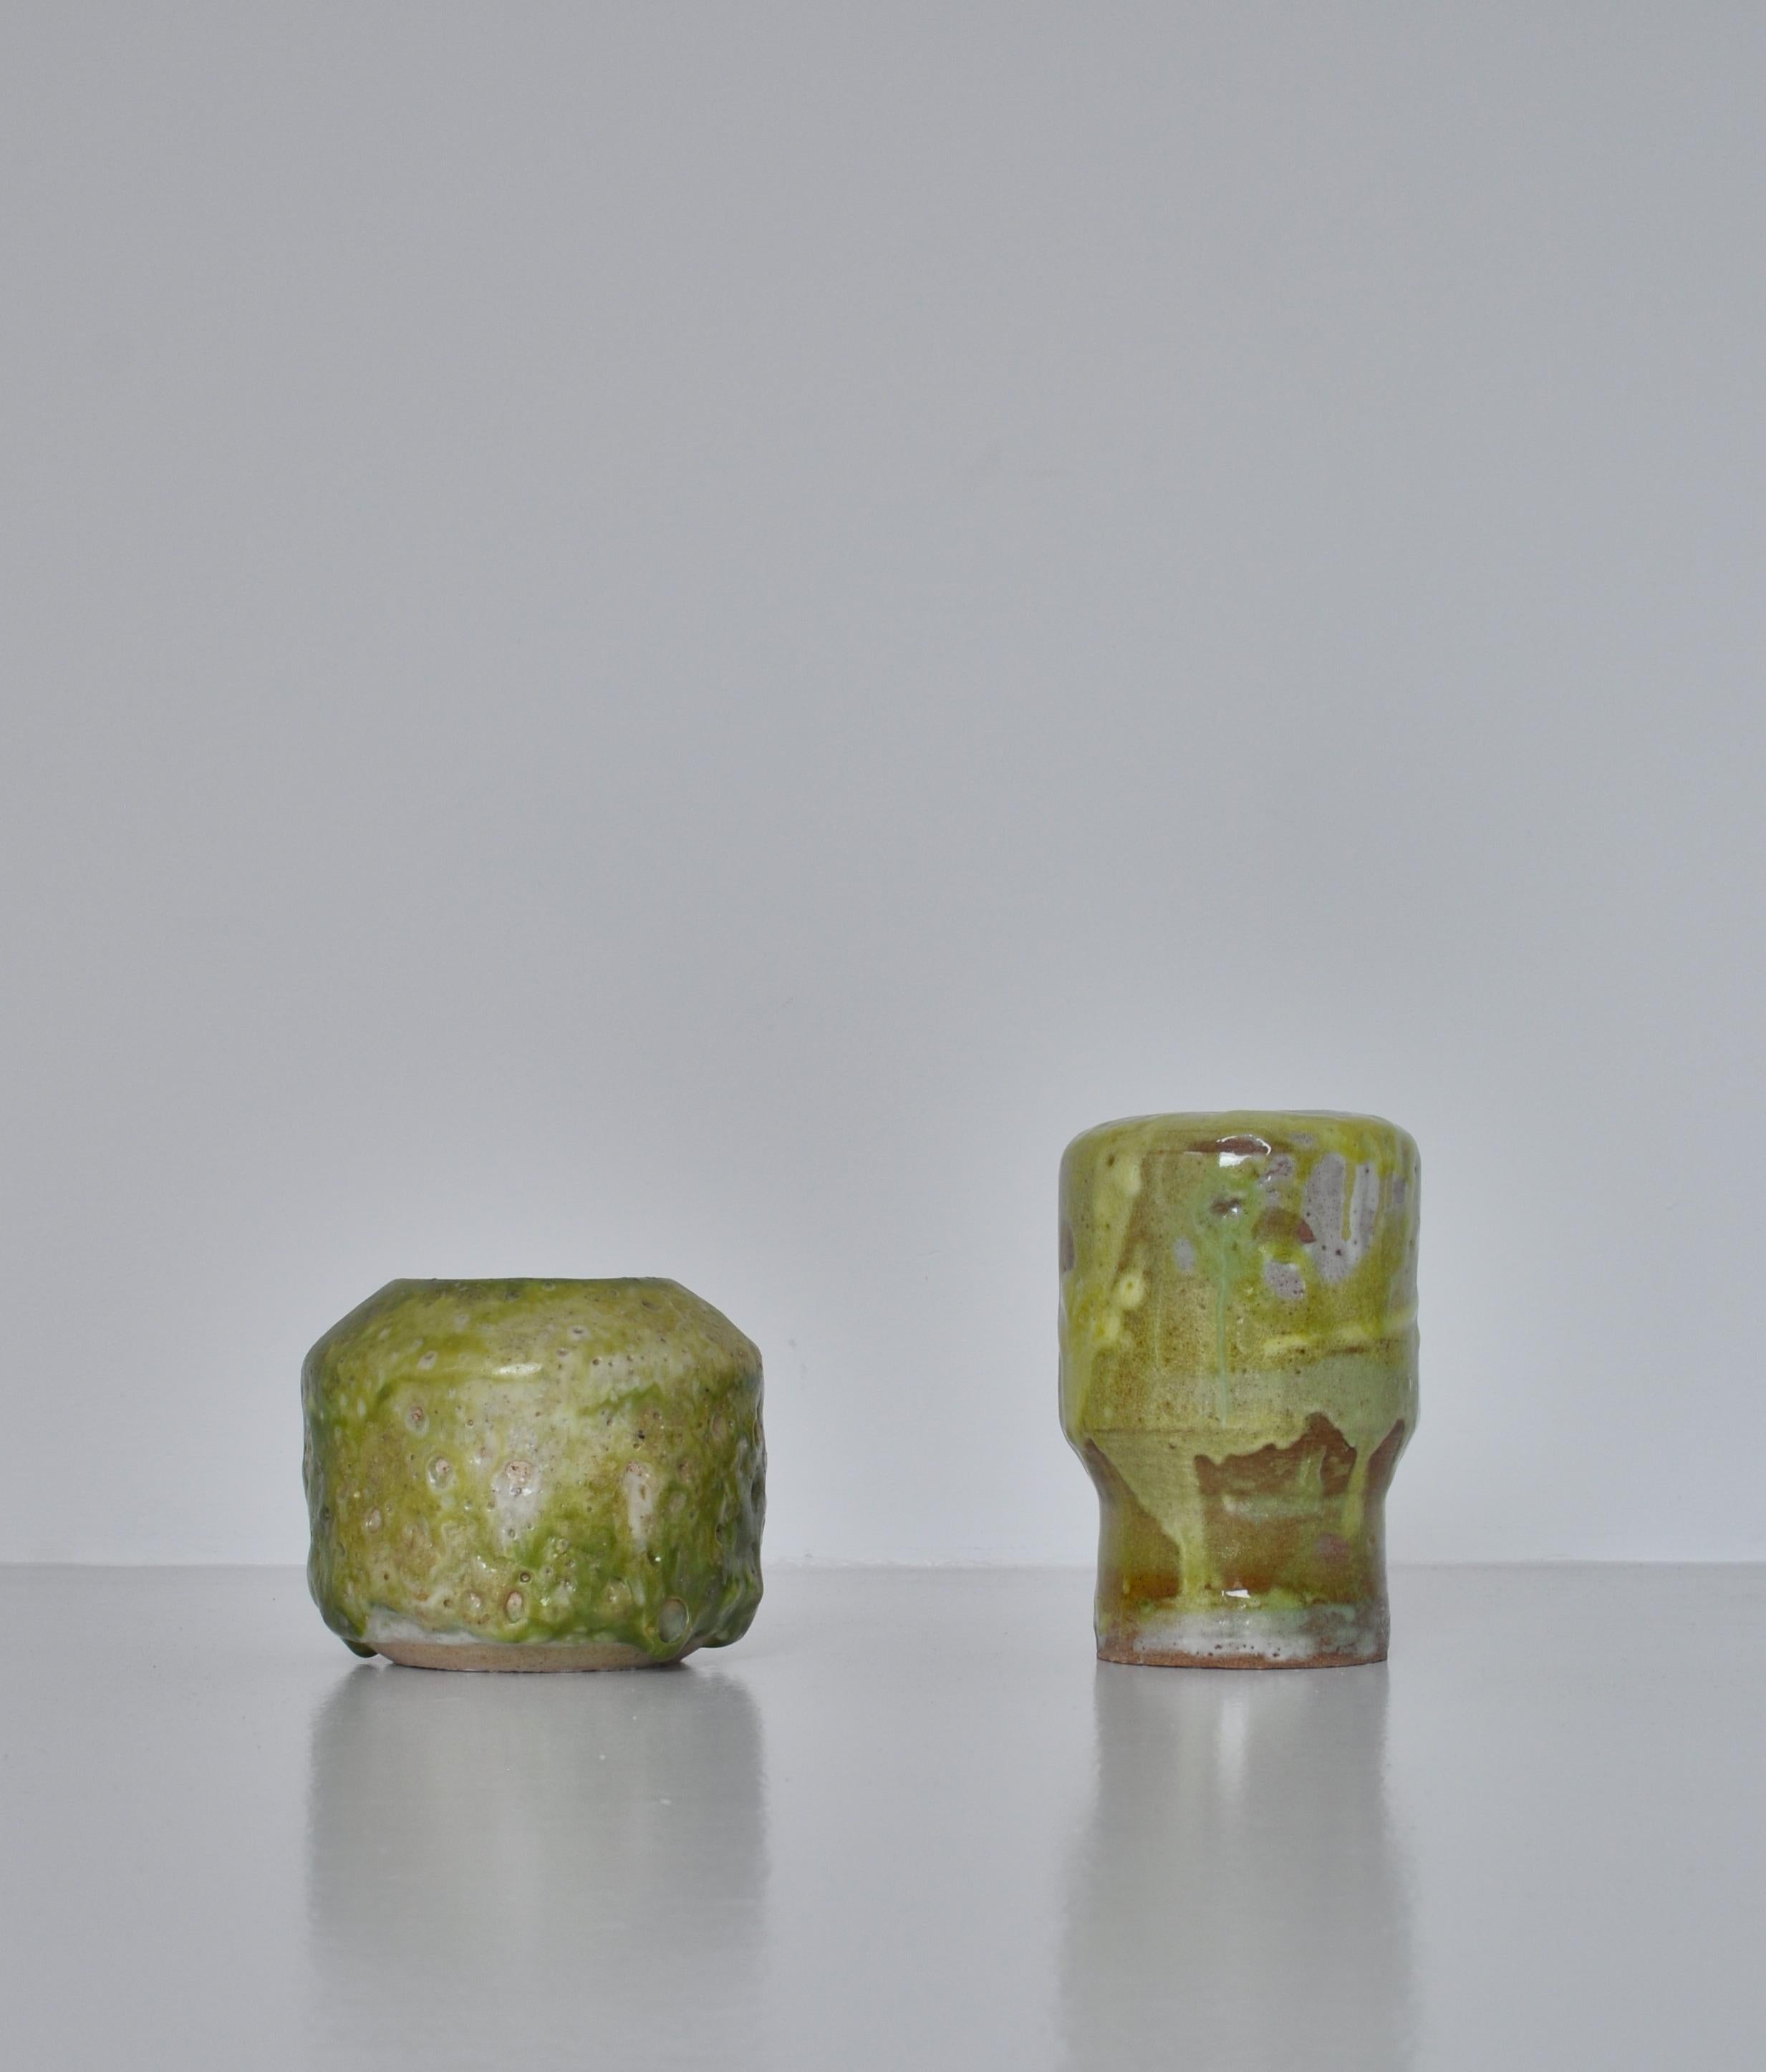 Scandinavian Modern Unique Set of Green Stoneware Vases by Ole Bjørn Krüger, 1960s Danish Modern